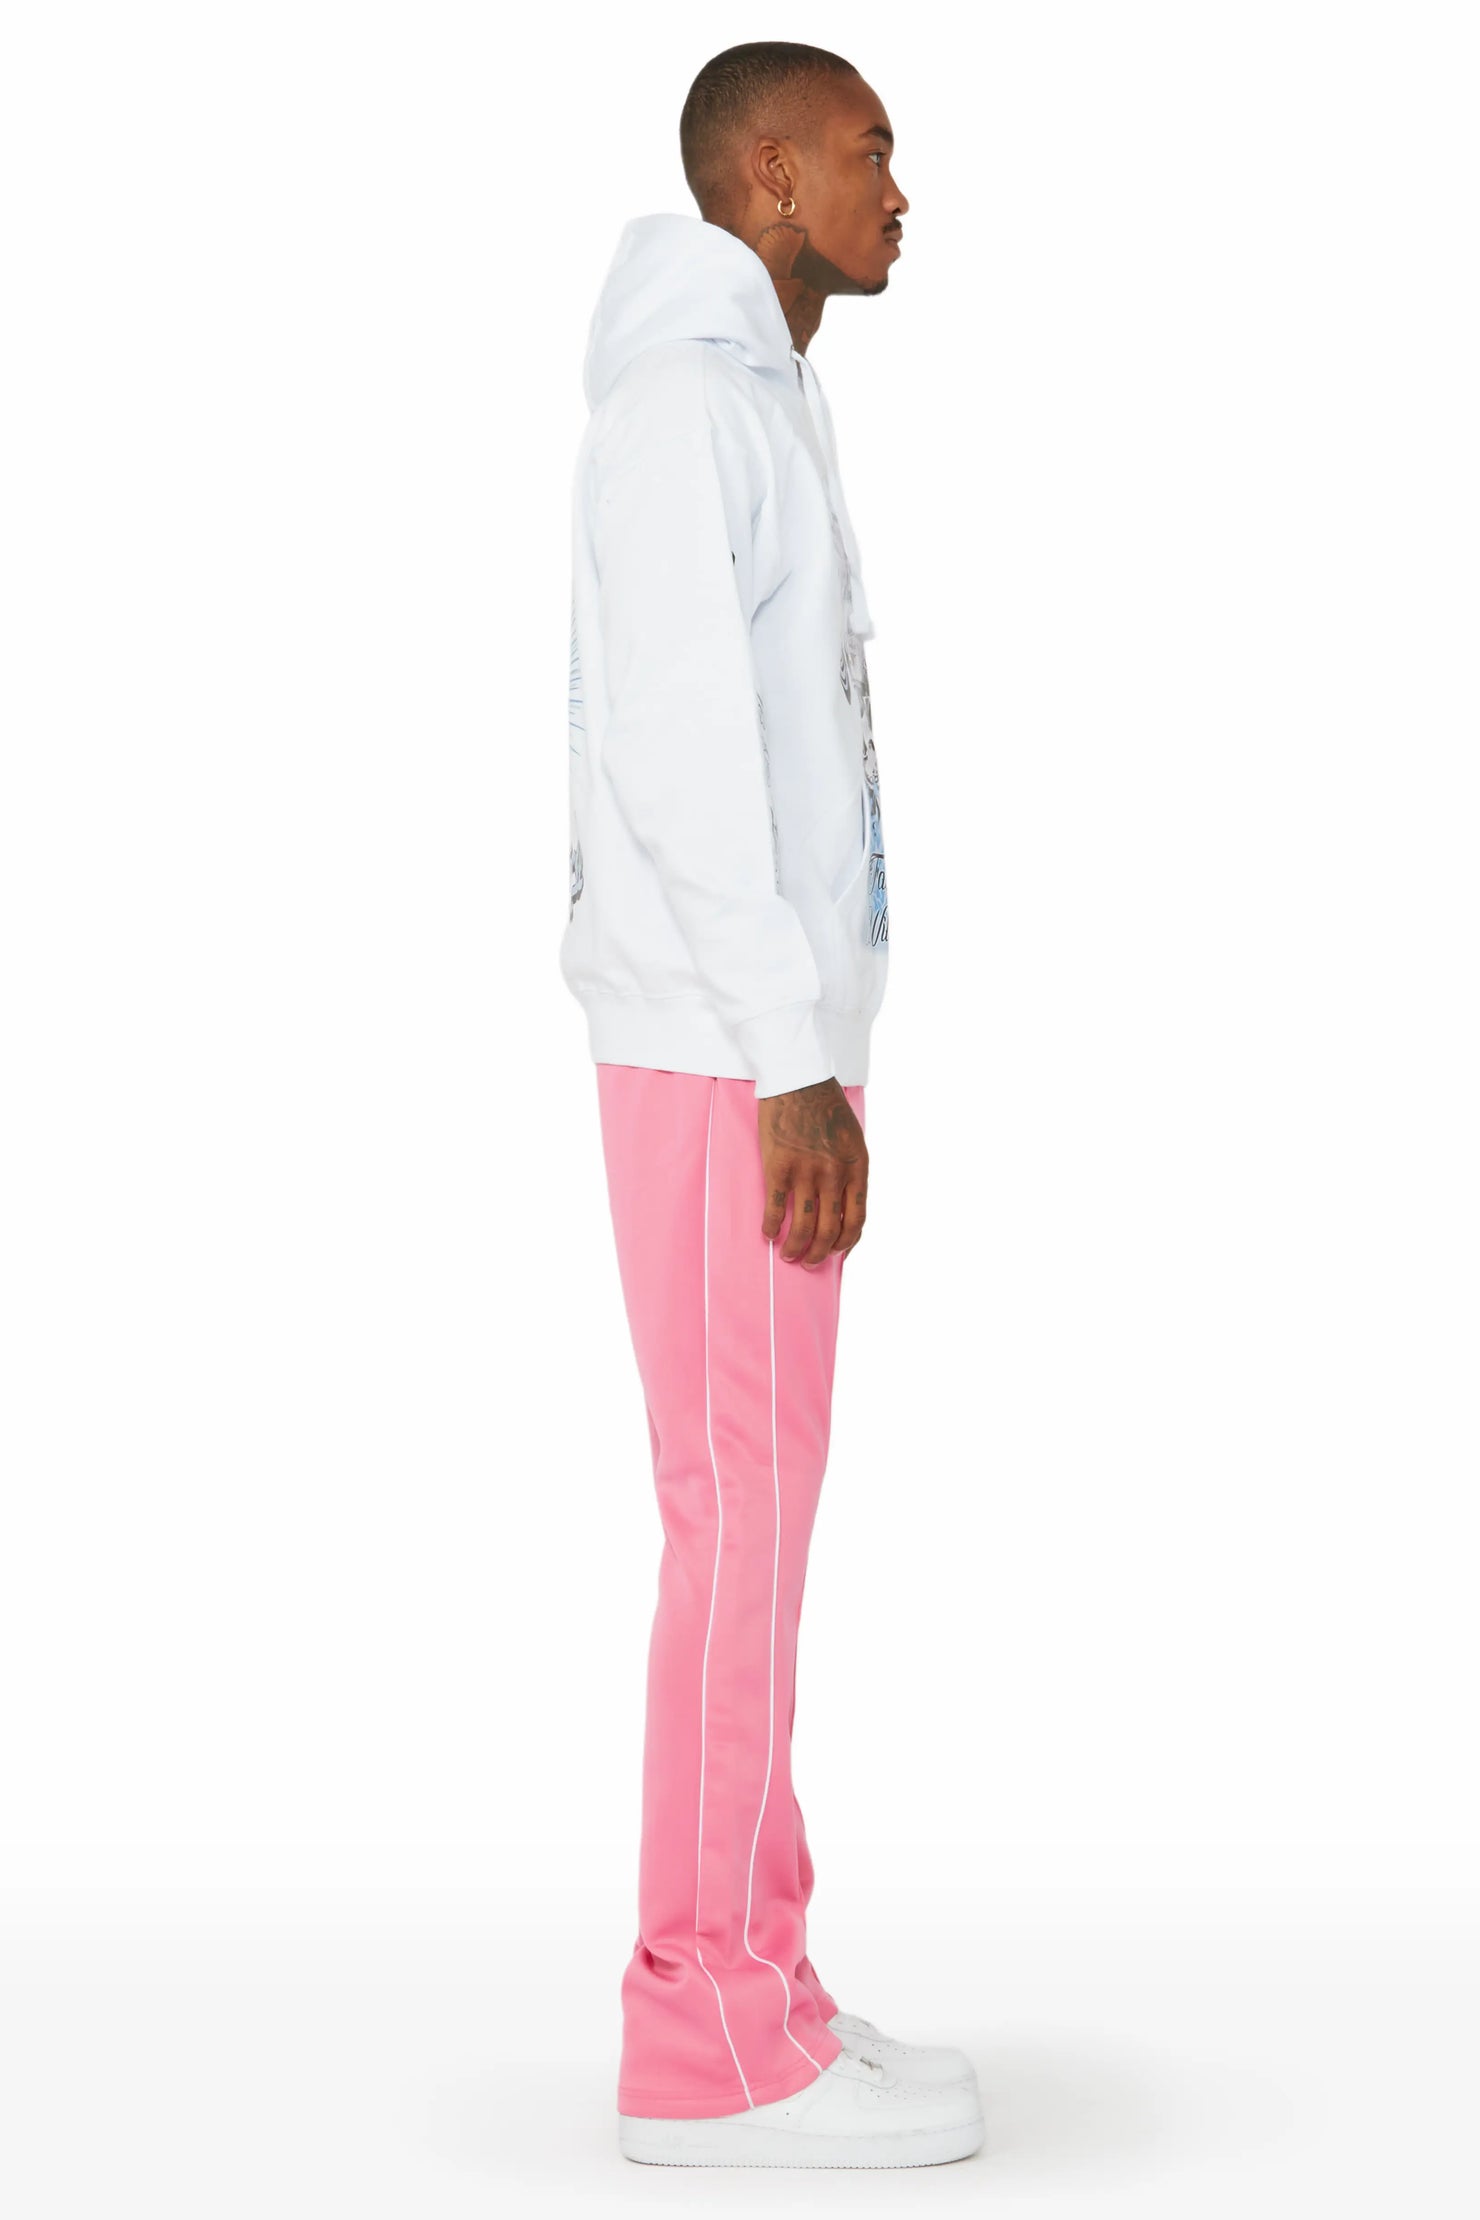 Kimball White/Pink Graphic Hoodie/Track Pant Set